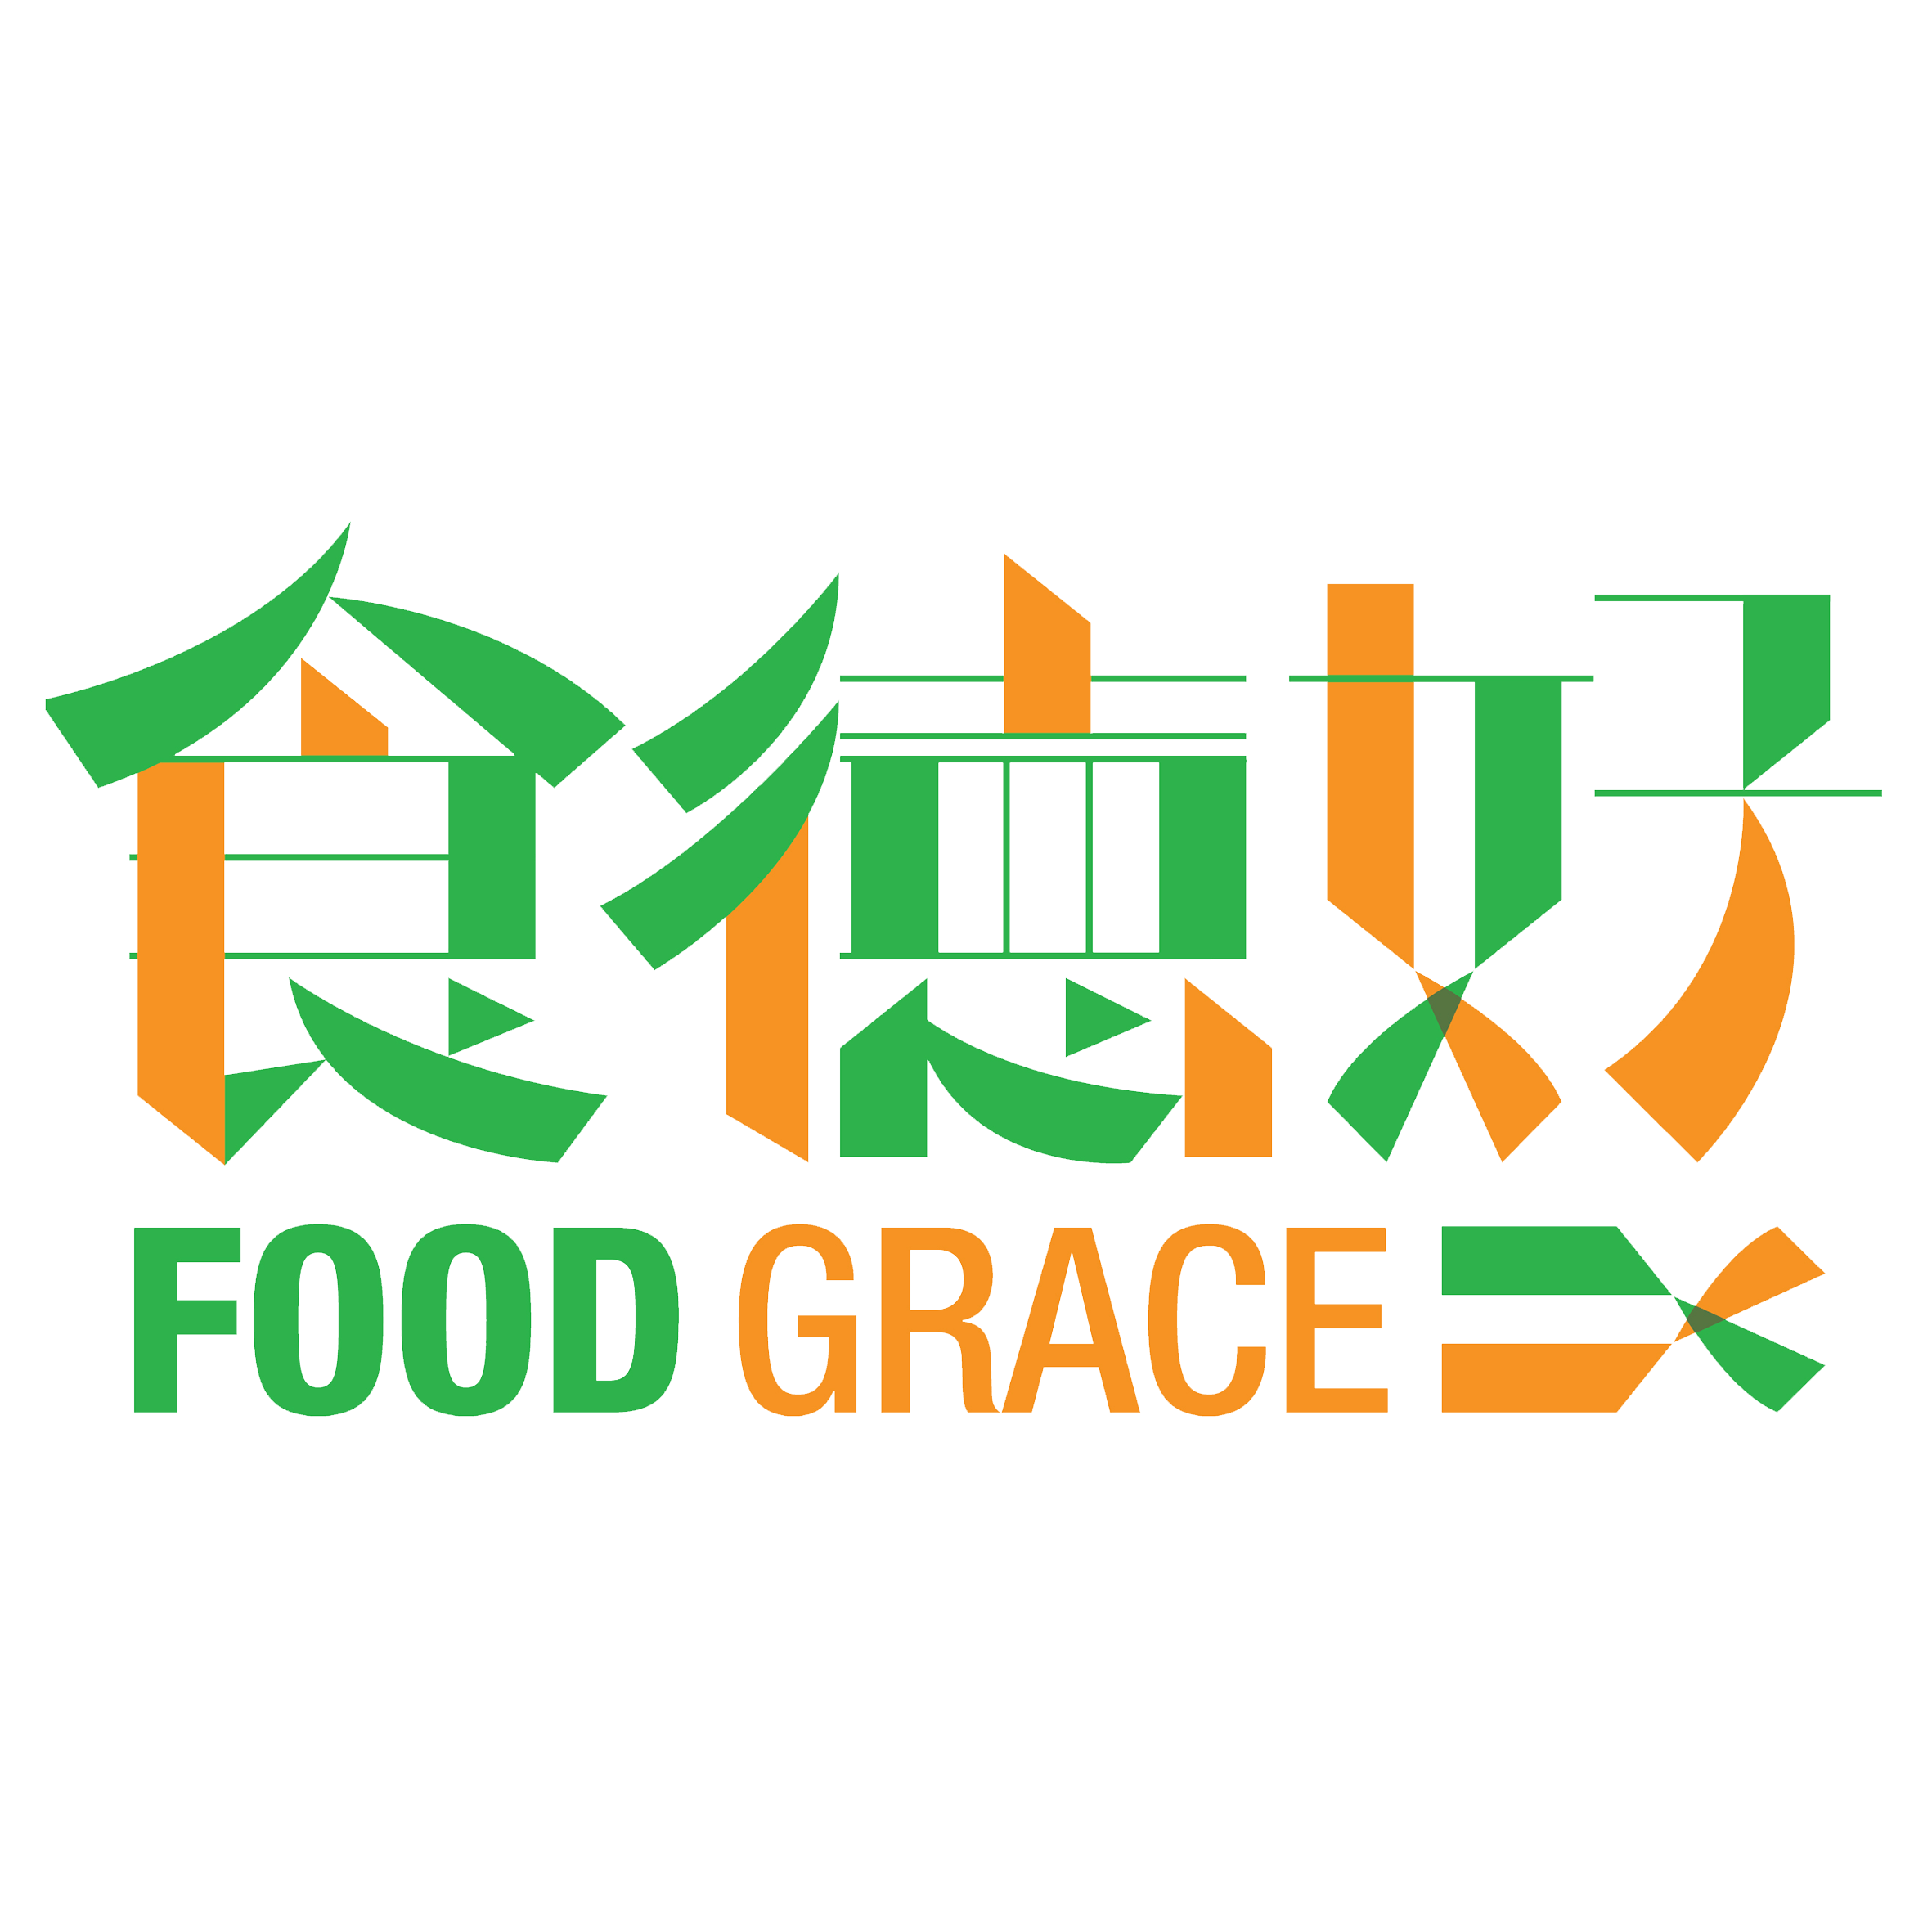 Food Grace